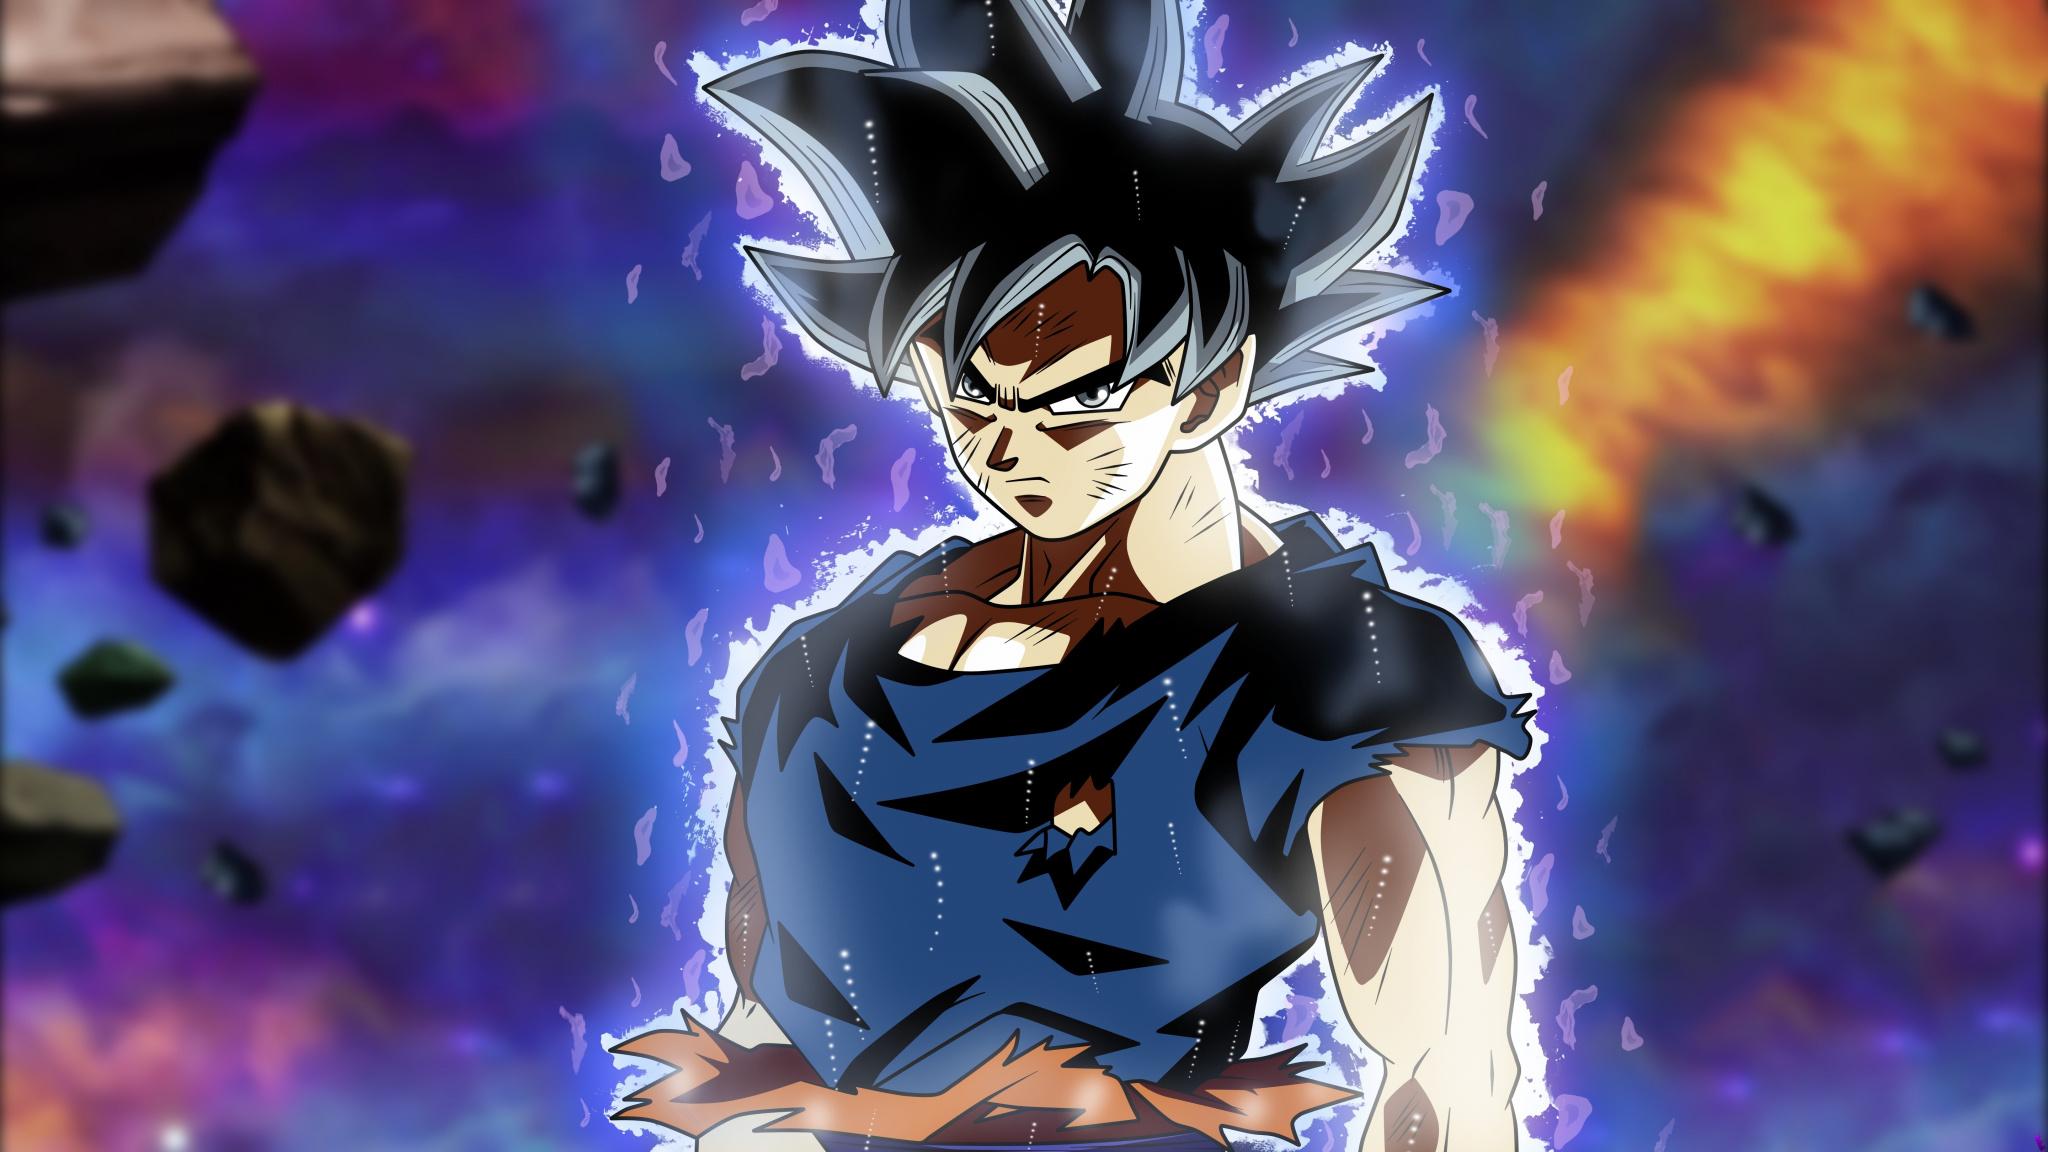 Download 2048x1152 Wallpaper Goku, Anime, Dragon Ball Z, Super Power